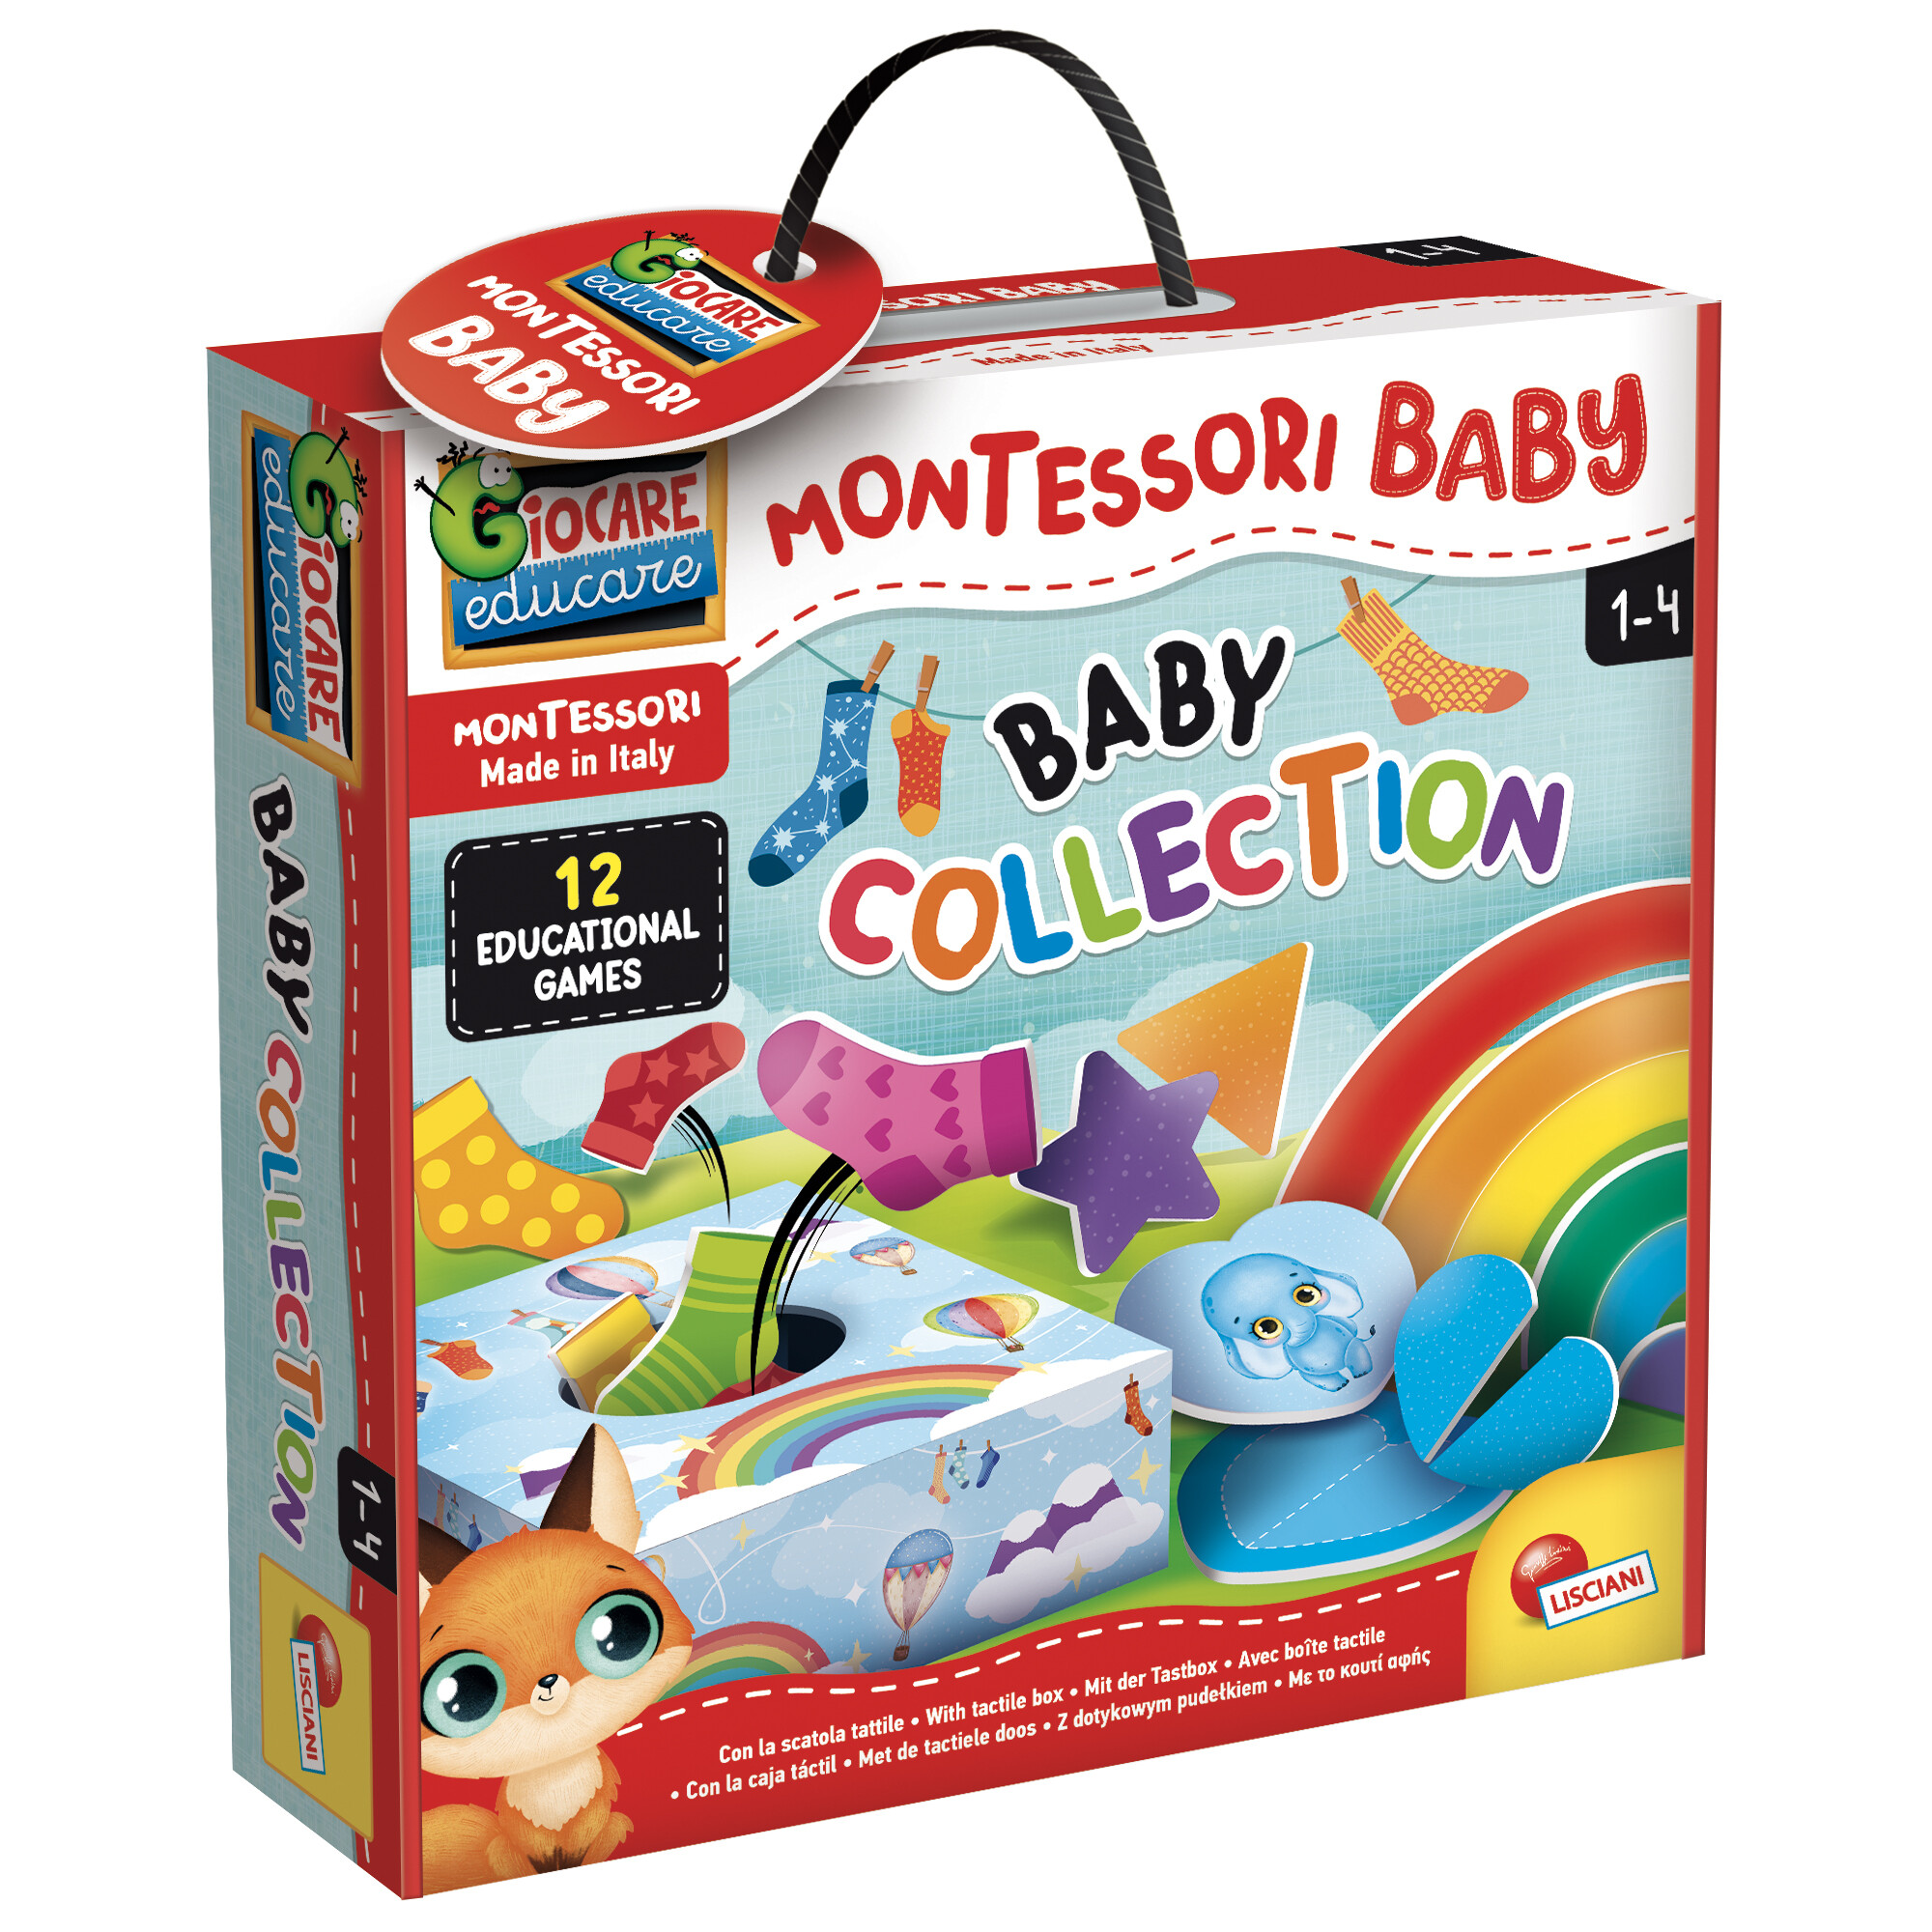 Montessori baby collection - LISCIANI